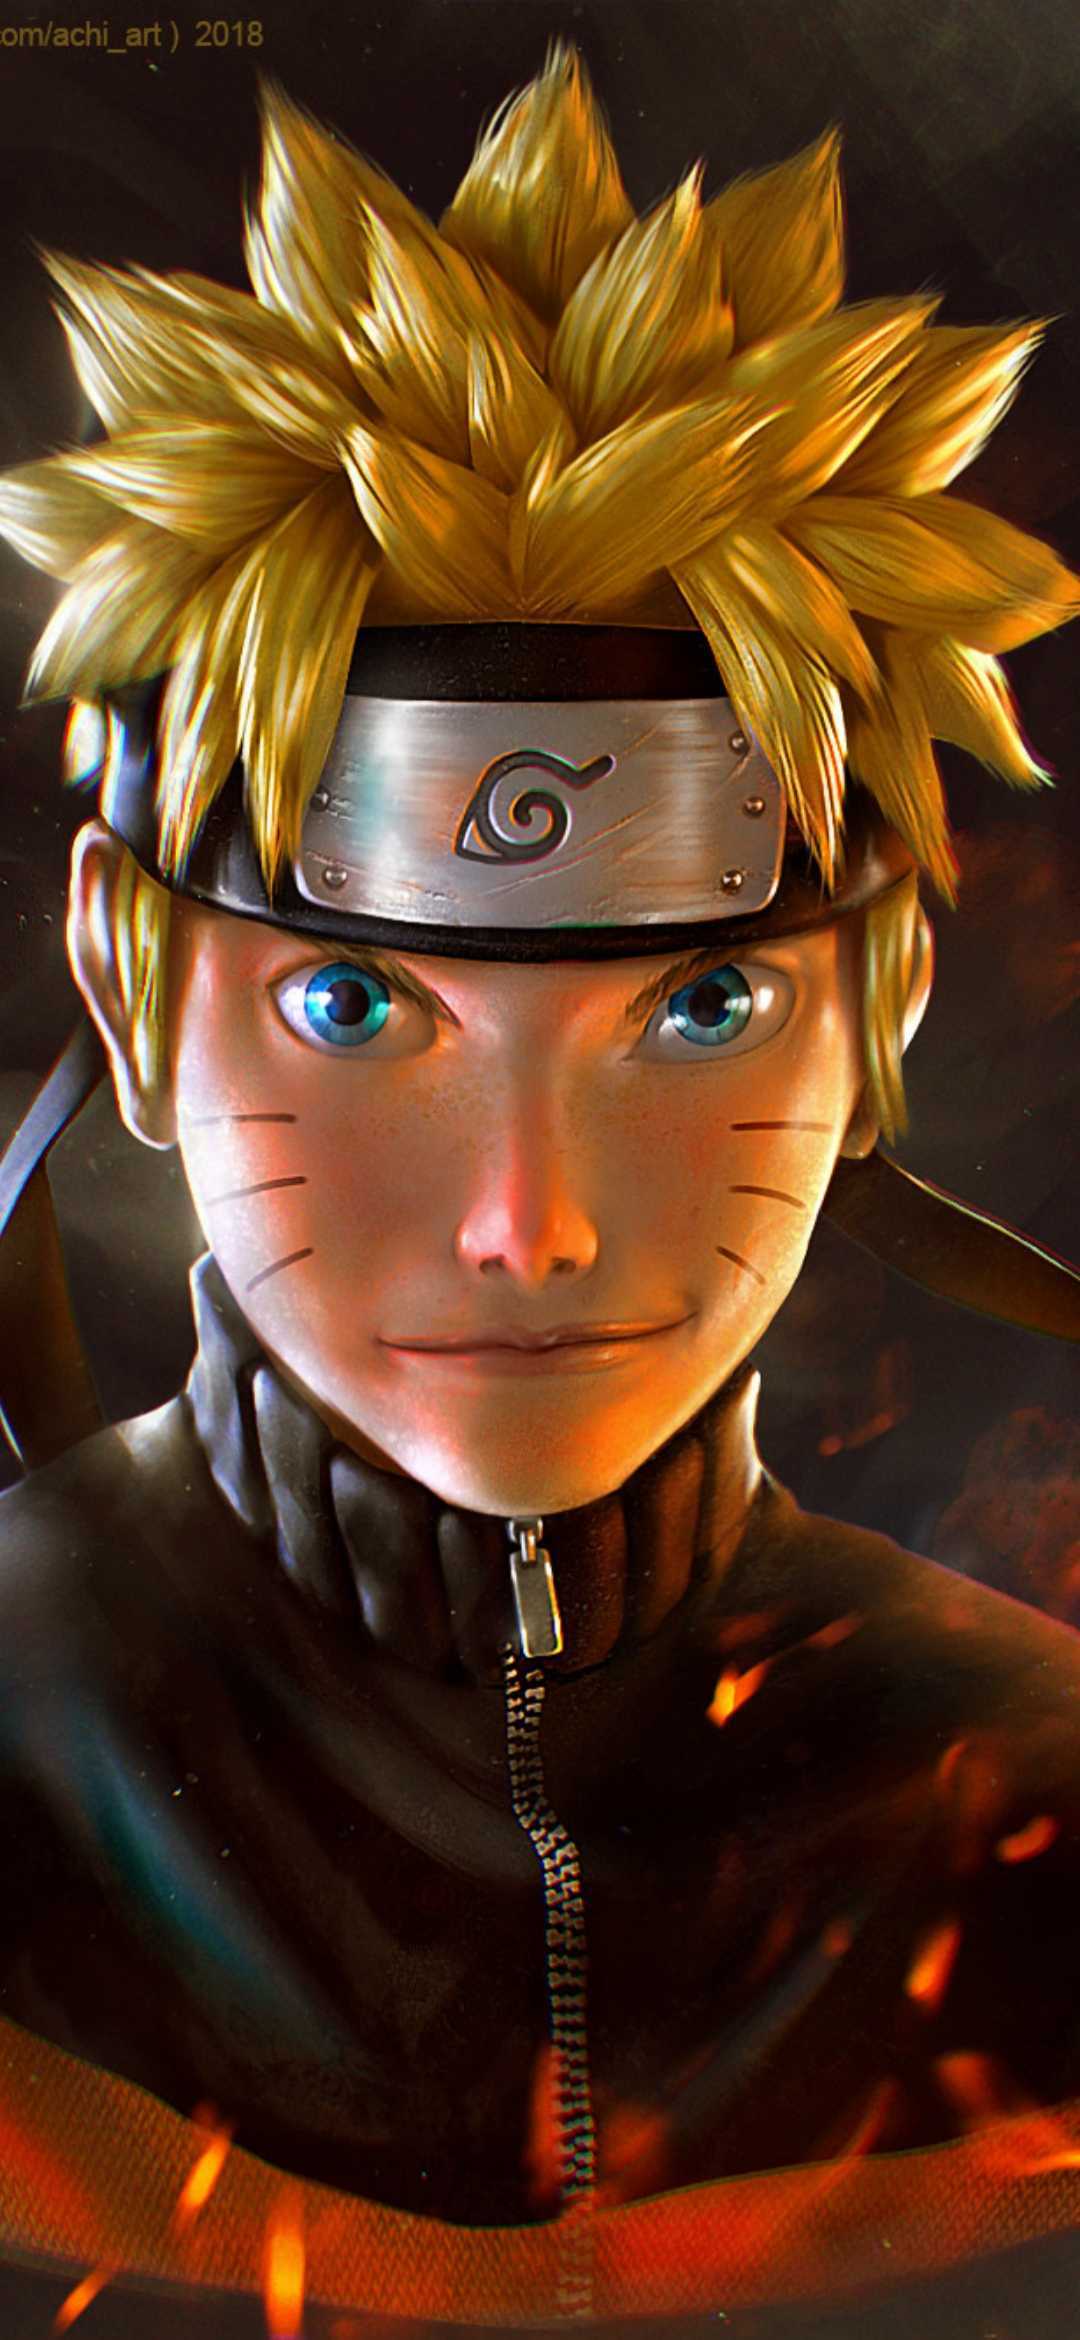 4K Naruto Wallpaper